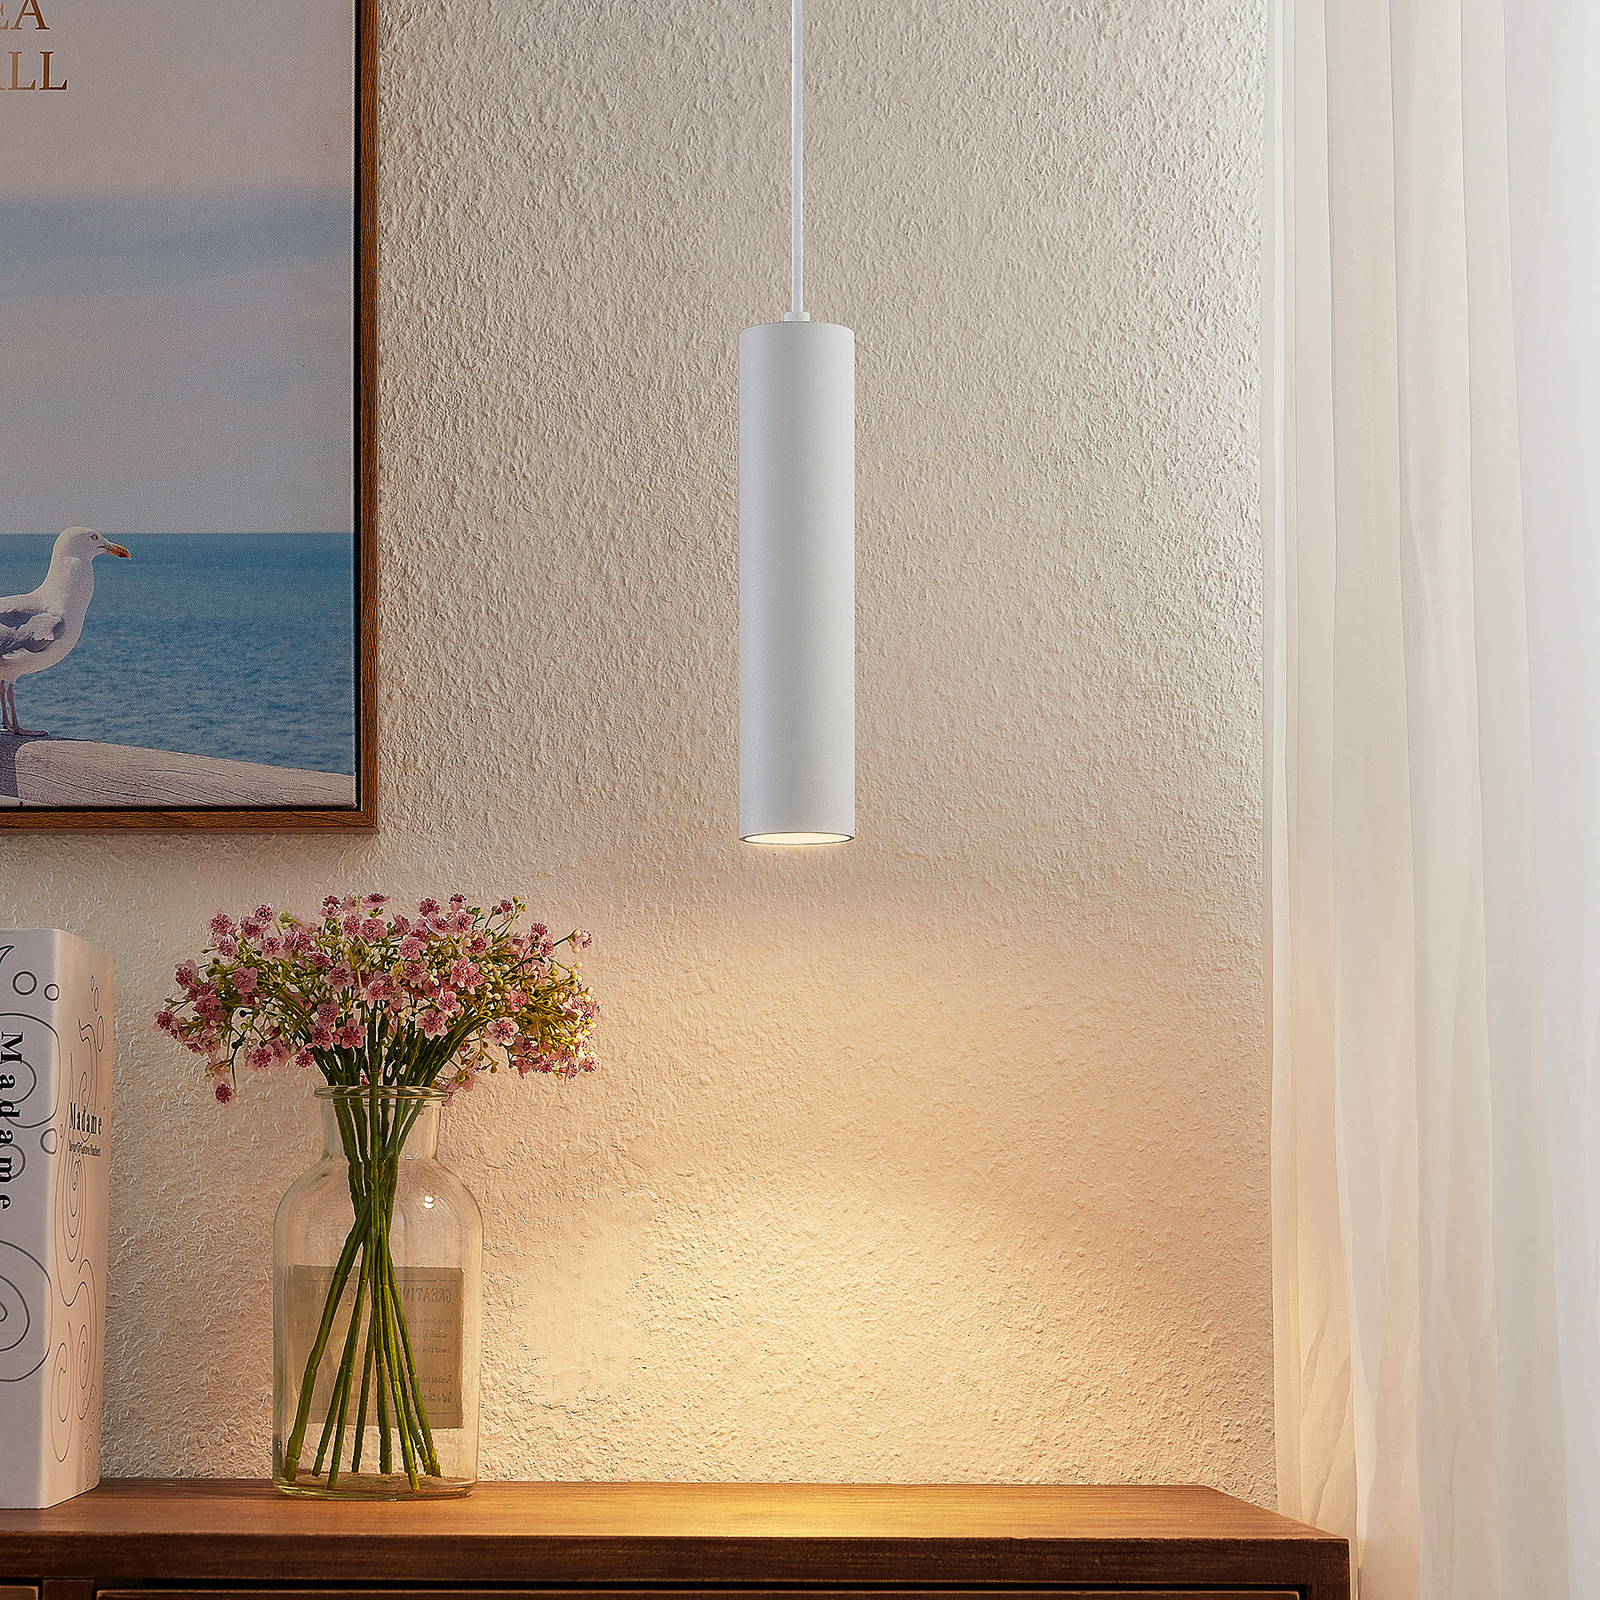 Prios Neliyah hanging light, round, white, 1-bulb